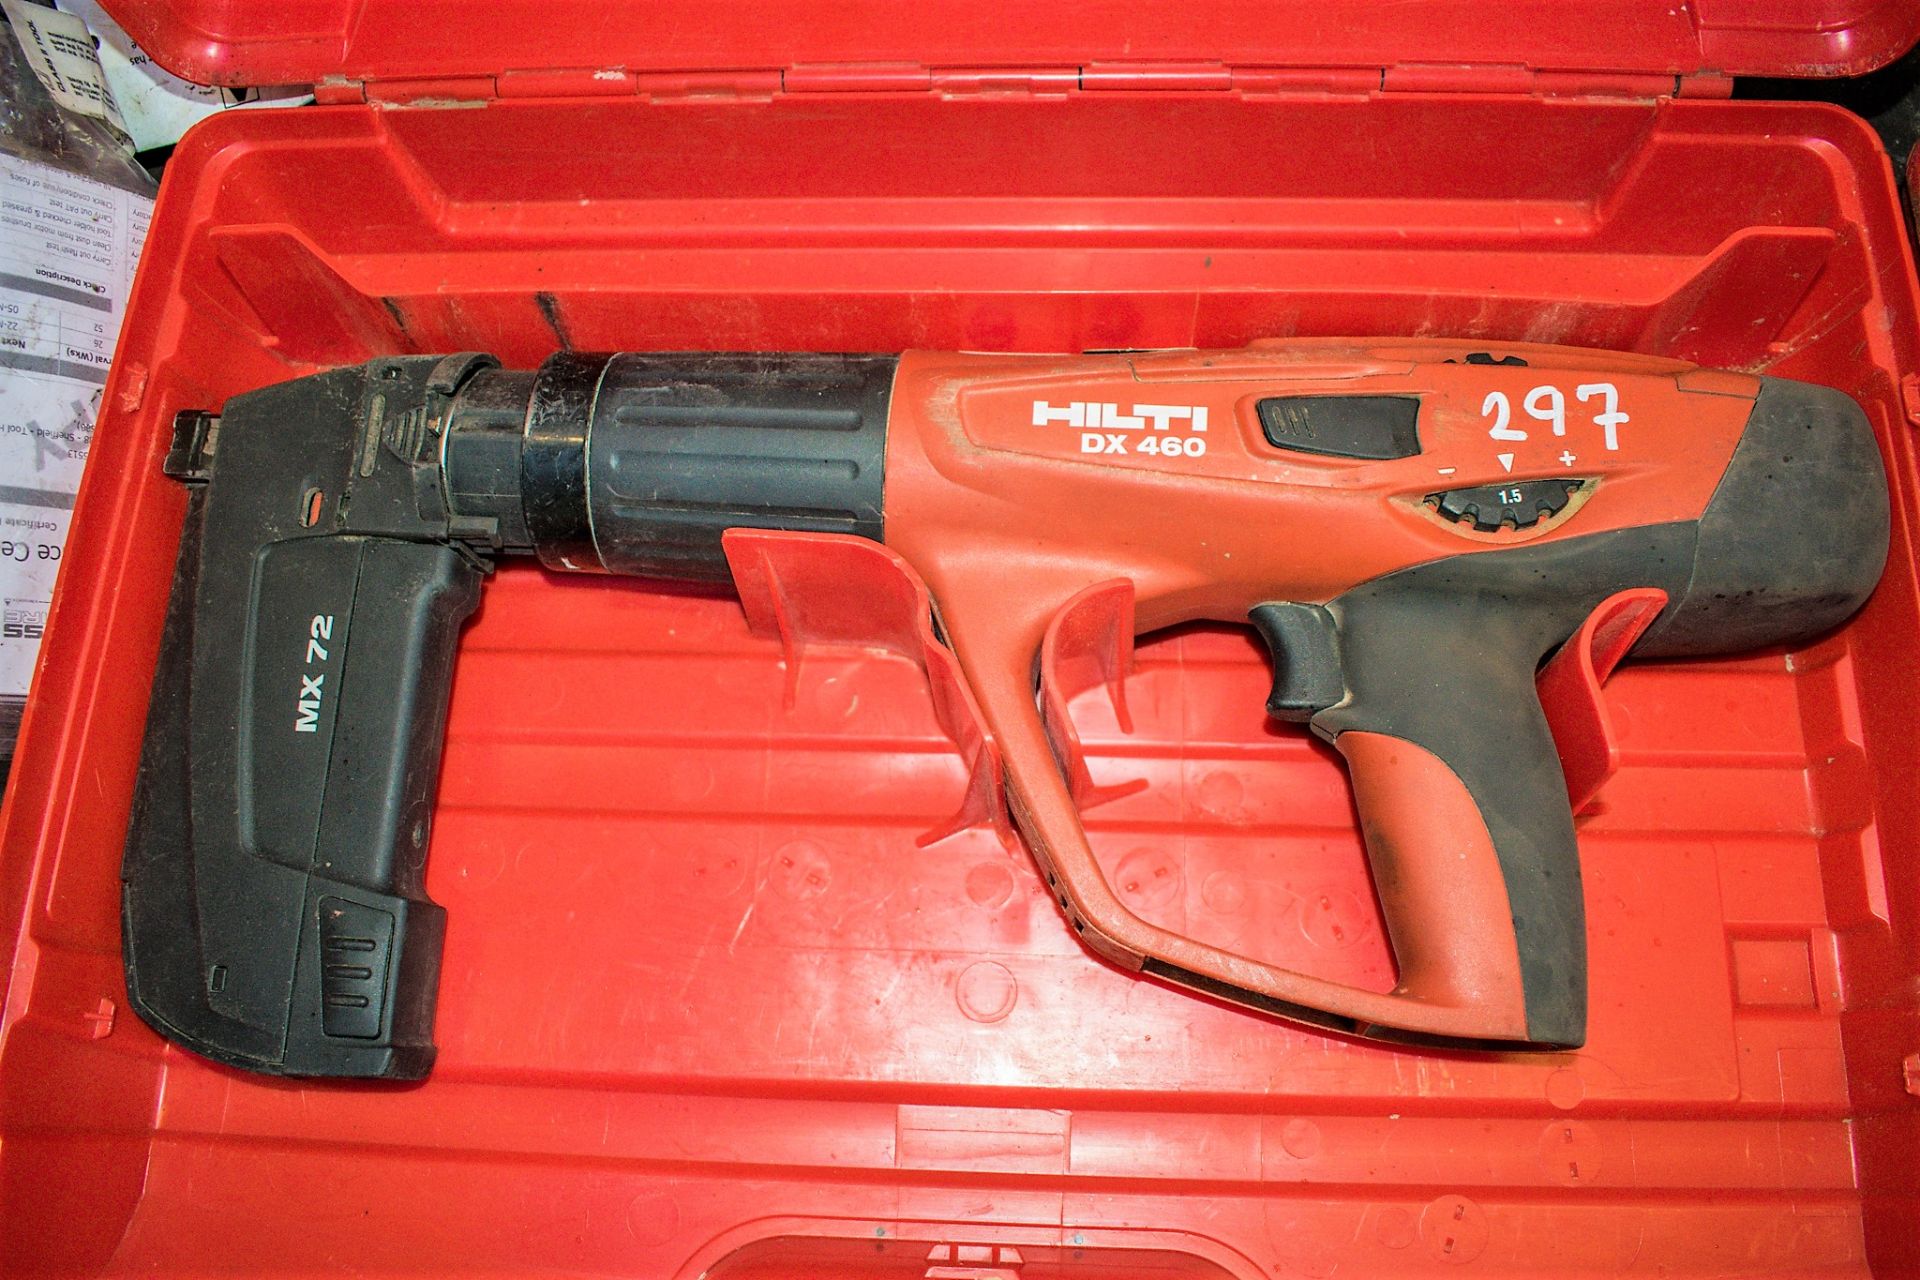 Hilti DX460 nail gun c/w carry case A682292